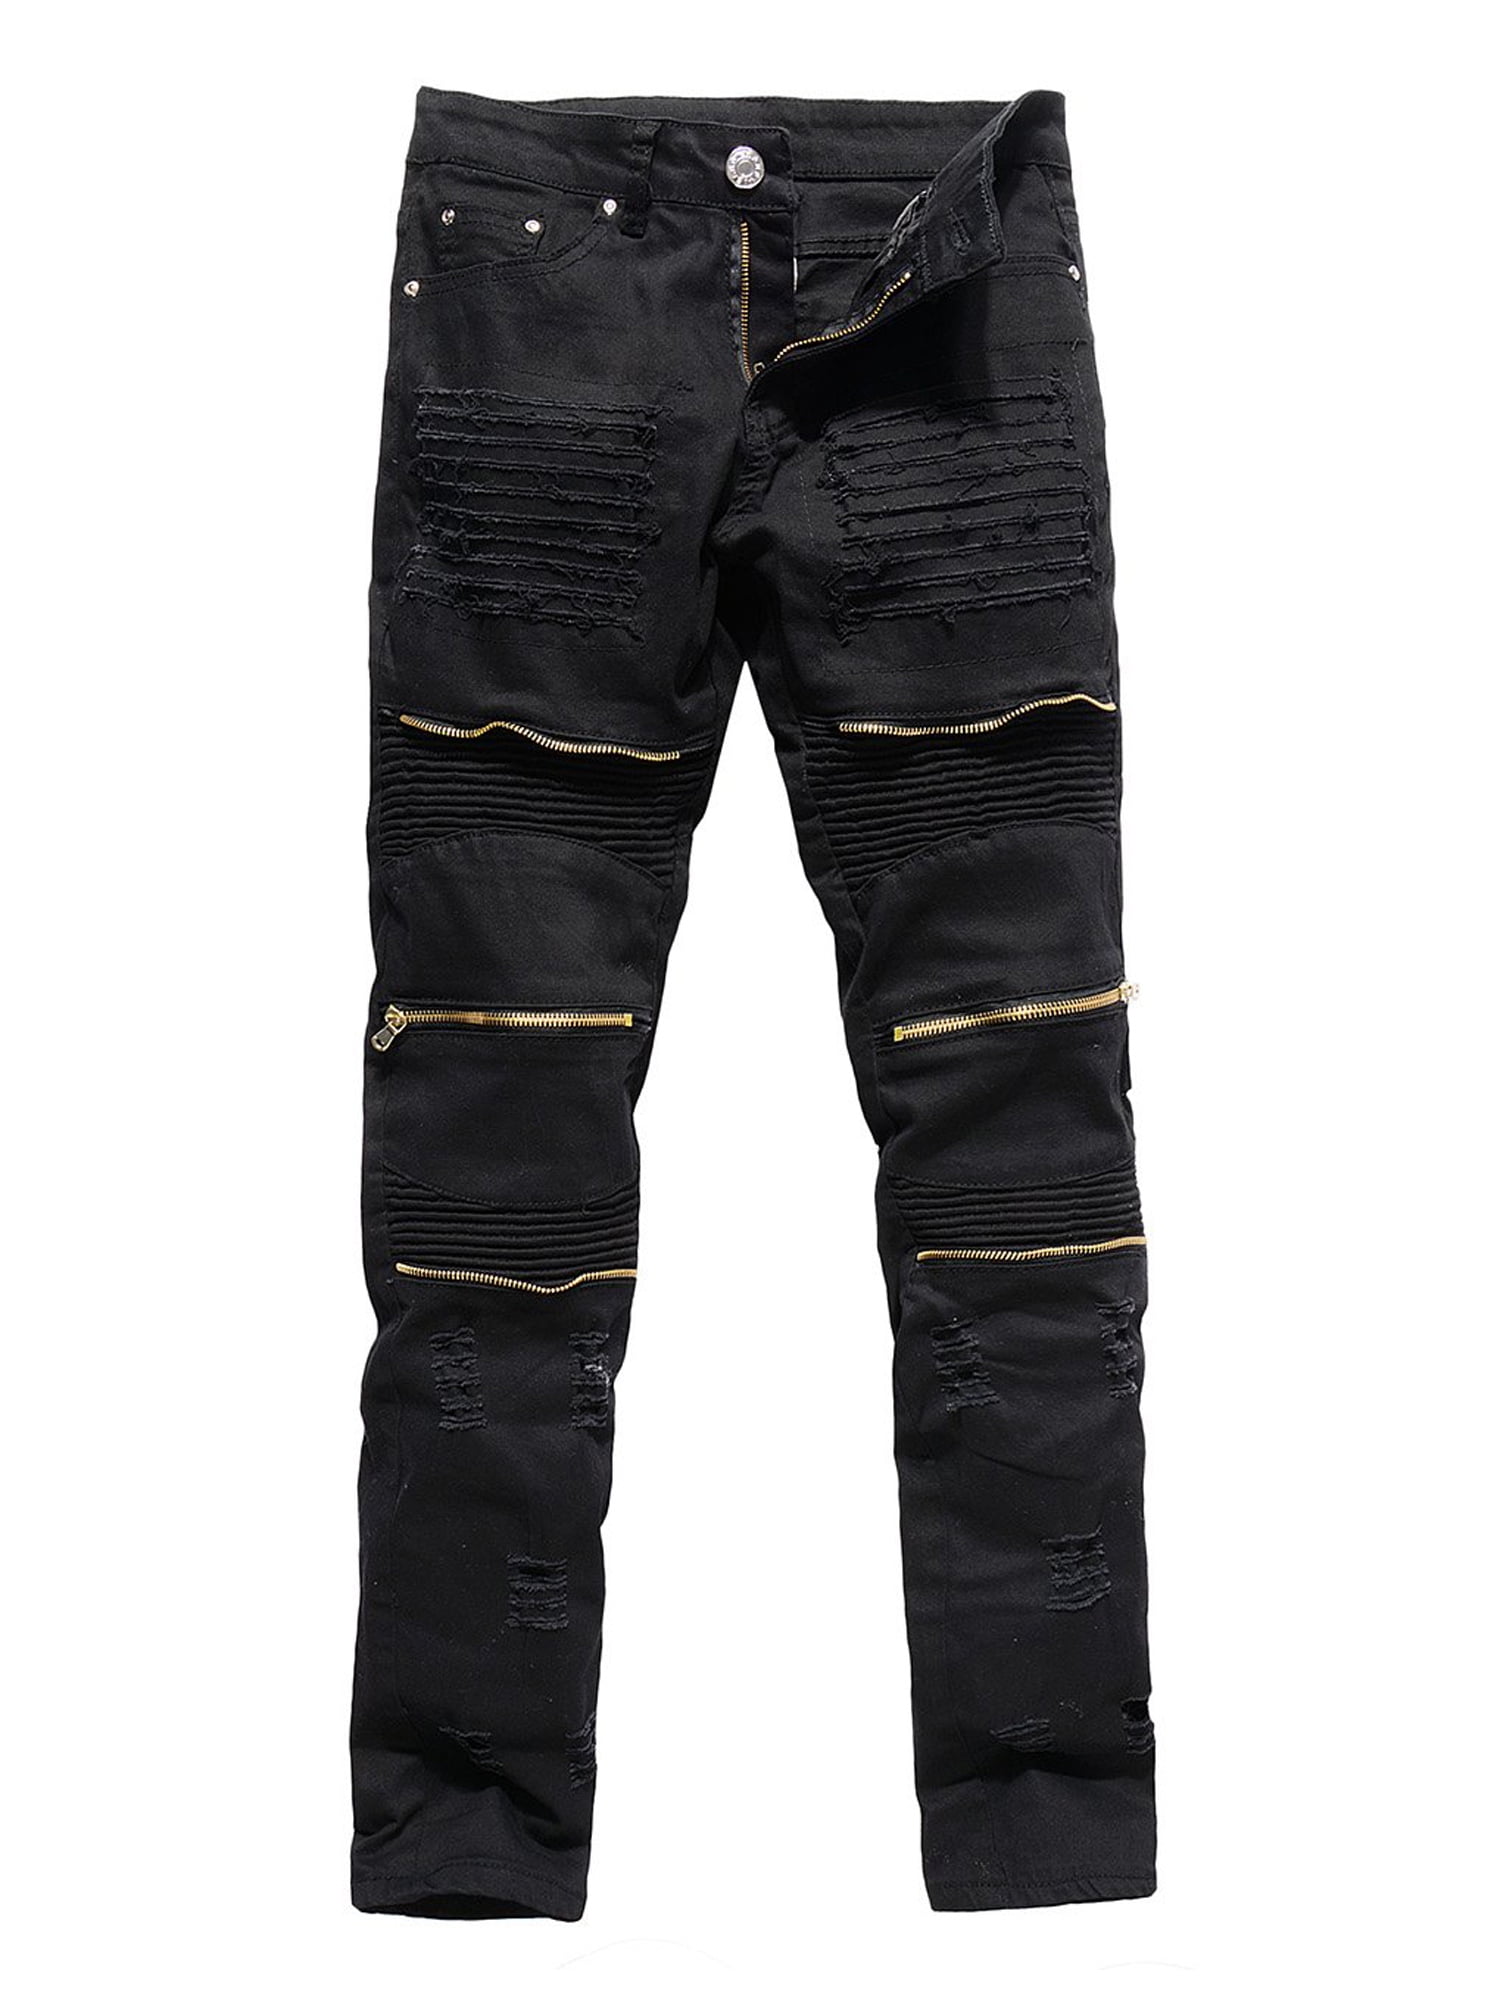 TANLANG Mens Hole Pants Jeans Trousers Distressed Ripped Biker Slim Fit Jeans Moto Retro Denim Pants 